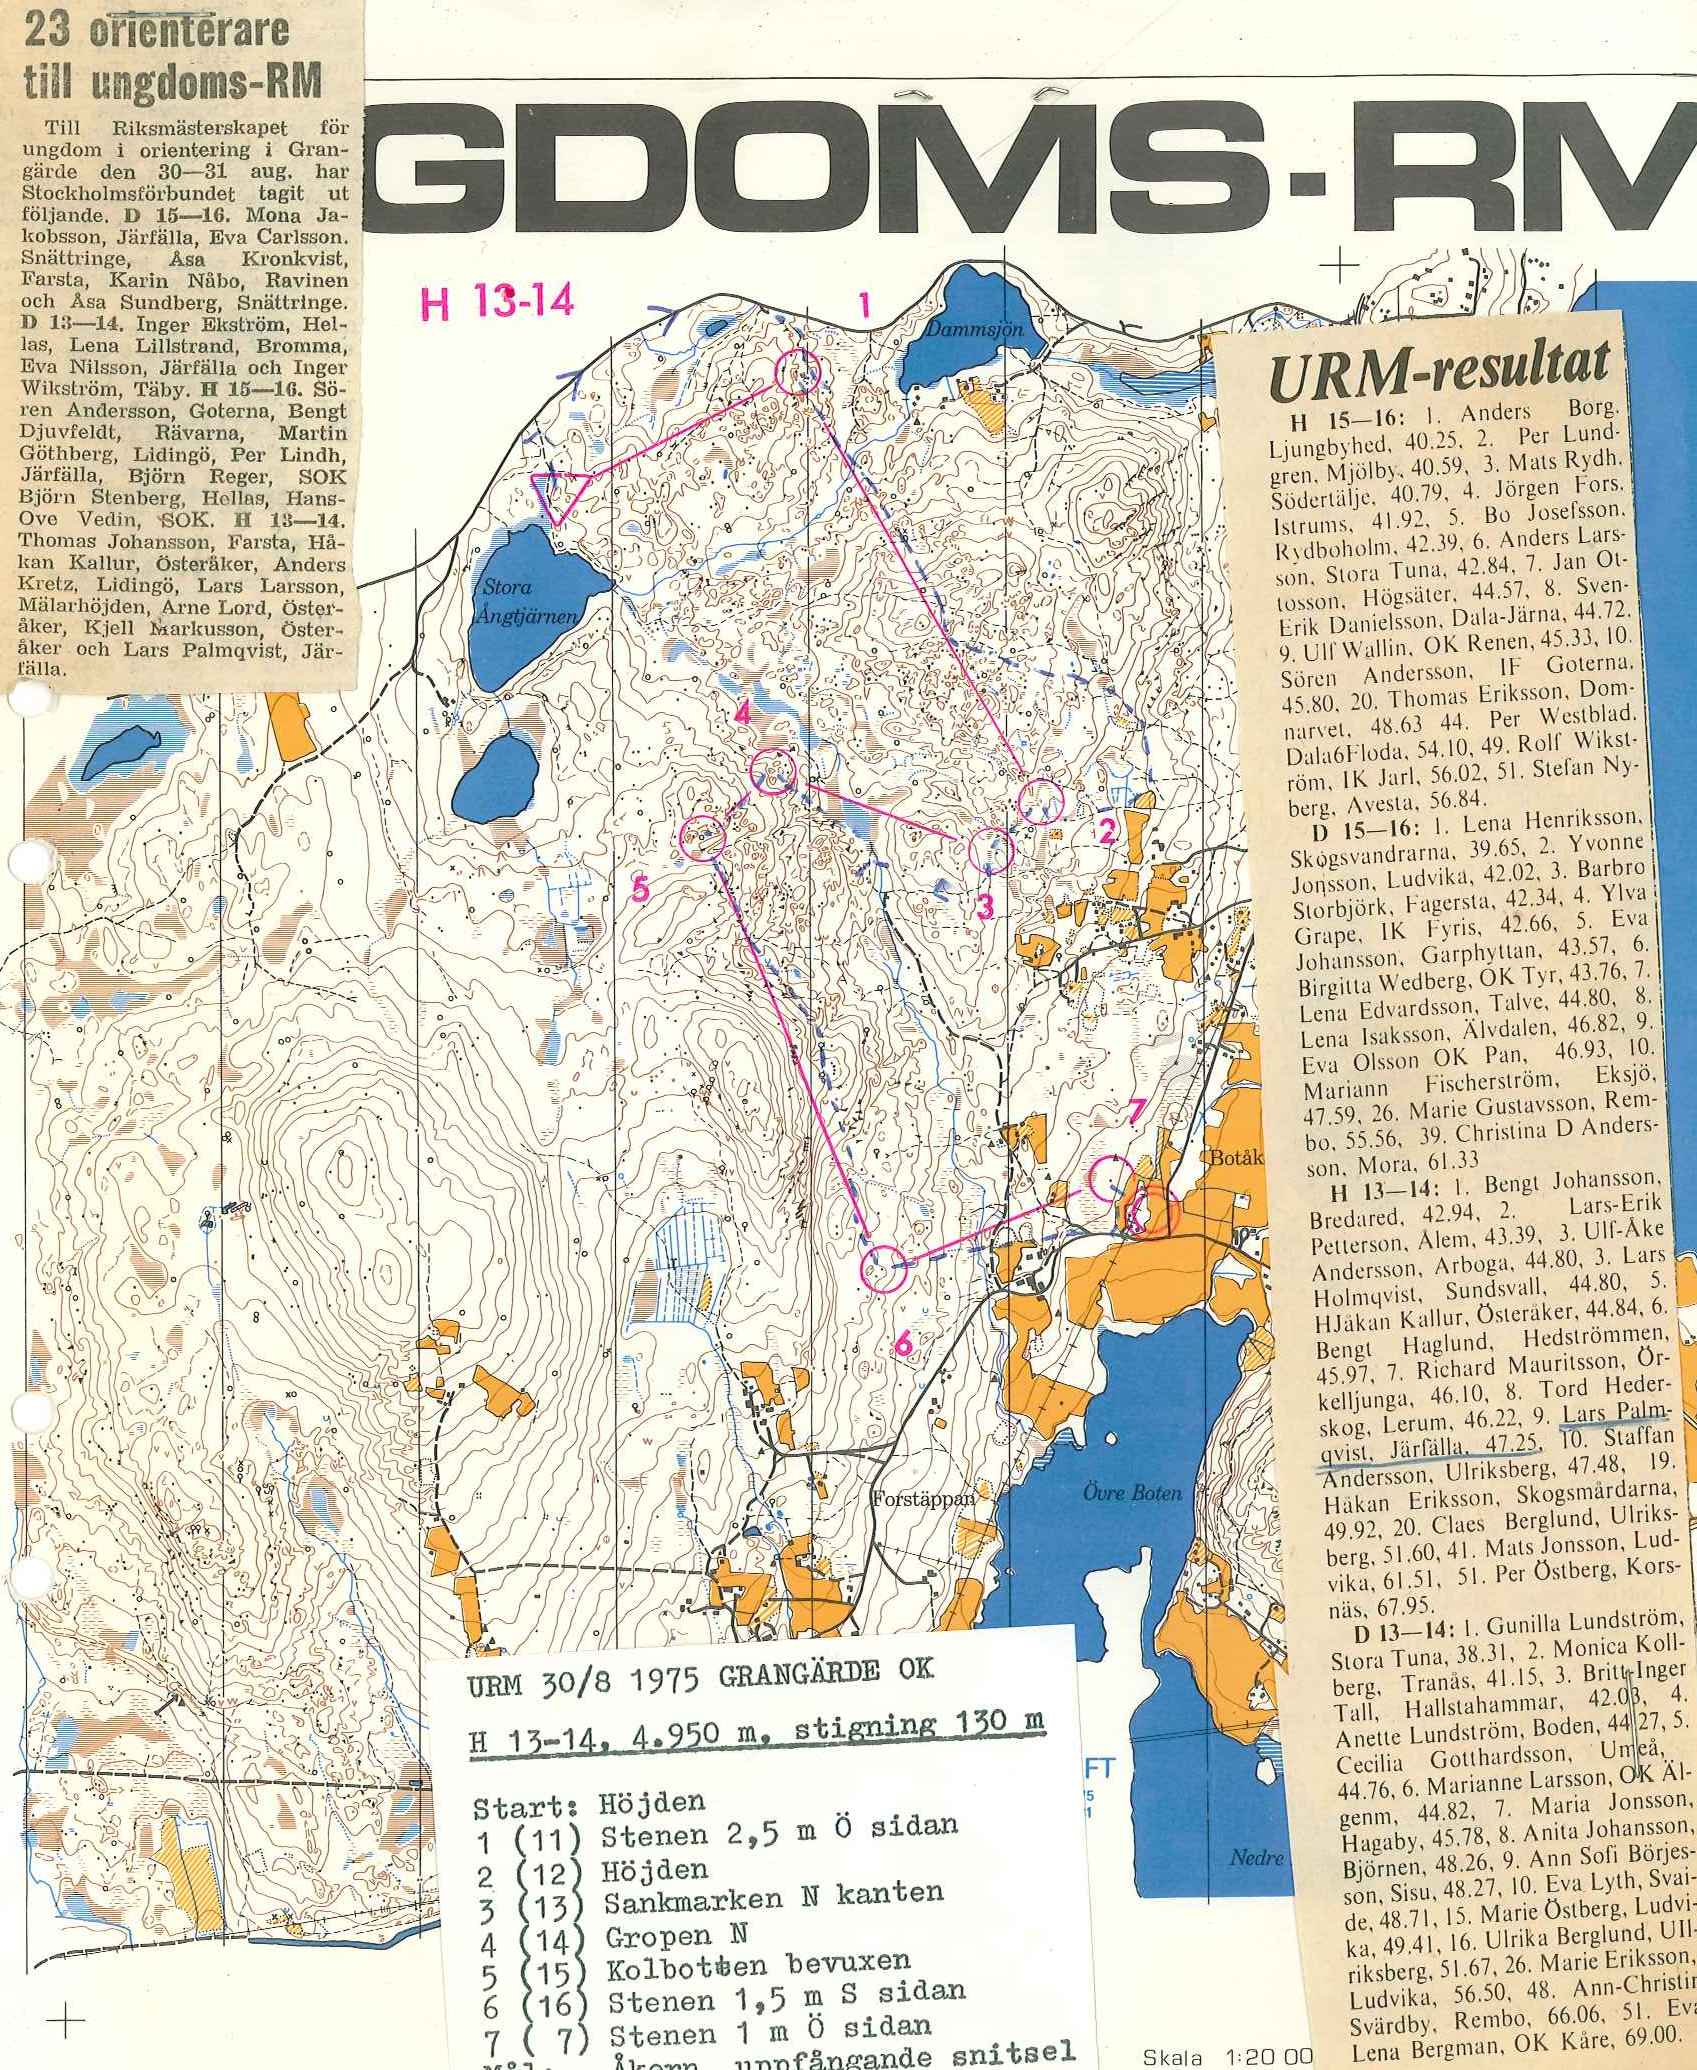 USM (30/08/1975)